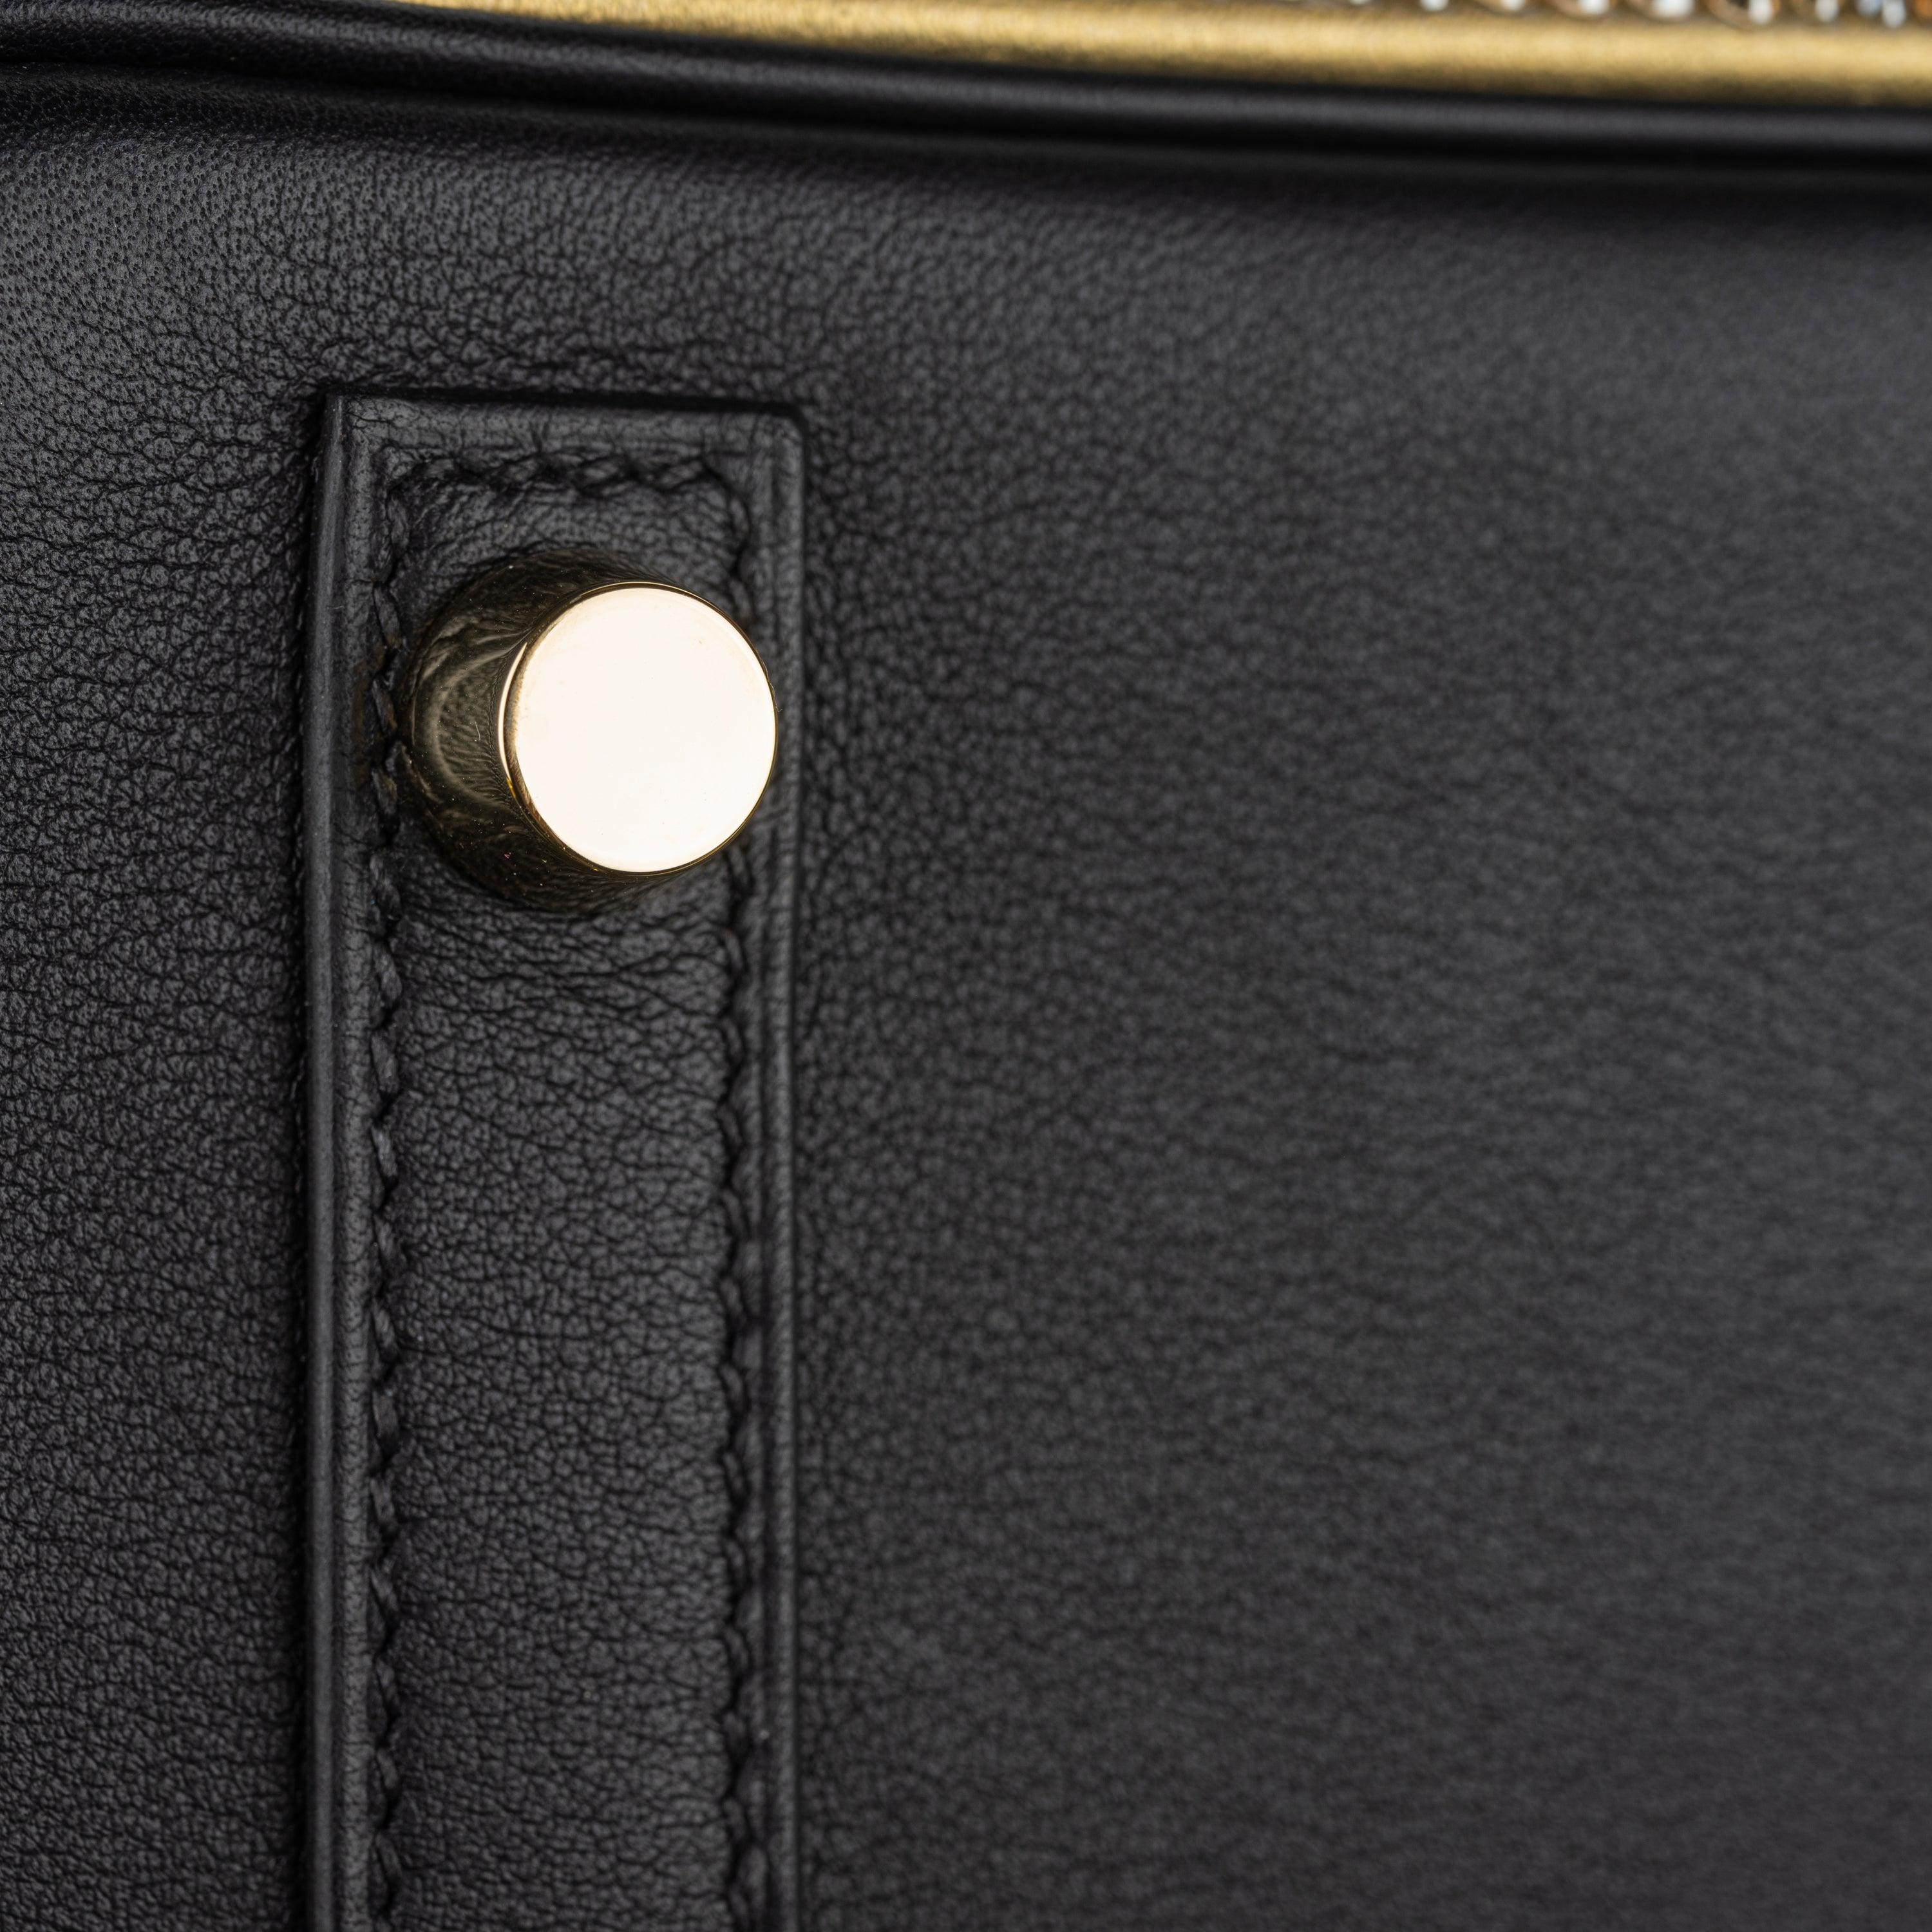 Hermès 25cm Birkin Customized Gold Moneybags Swarovski Crystal Gold Hardware For Sale 6